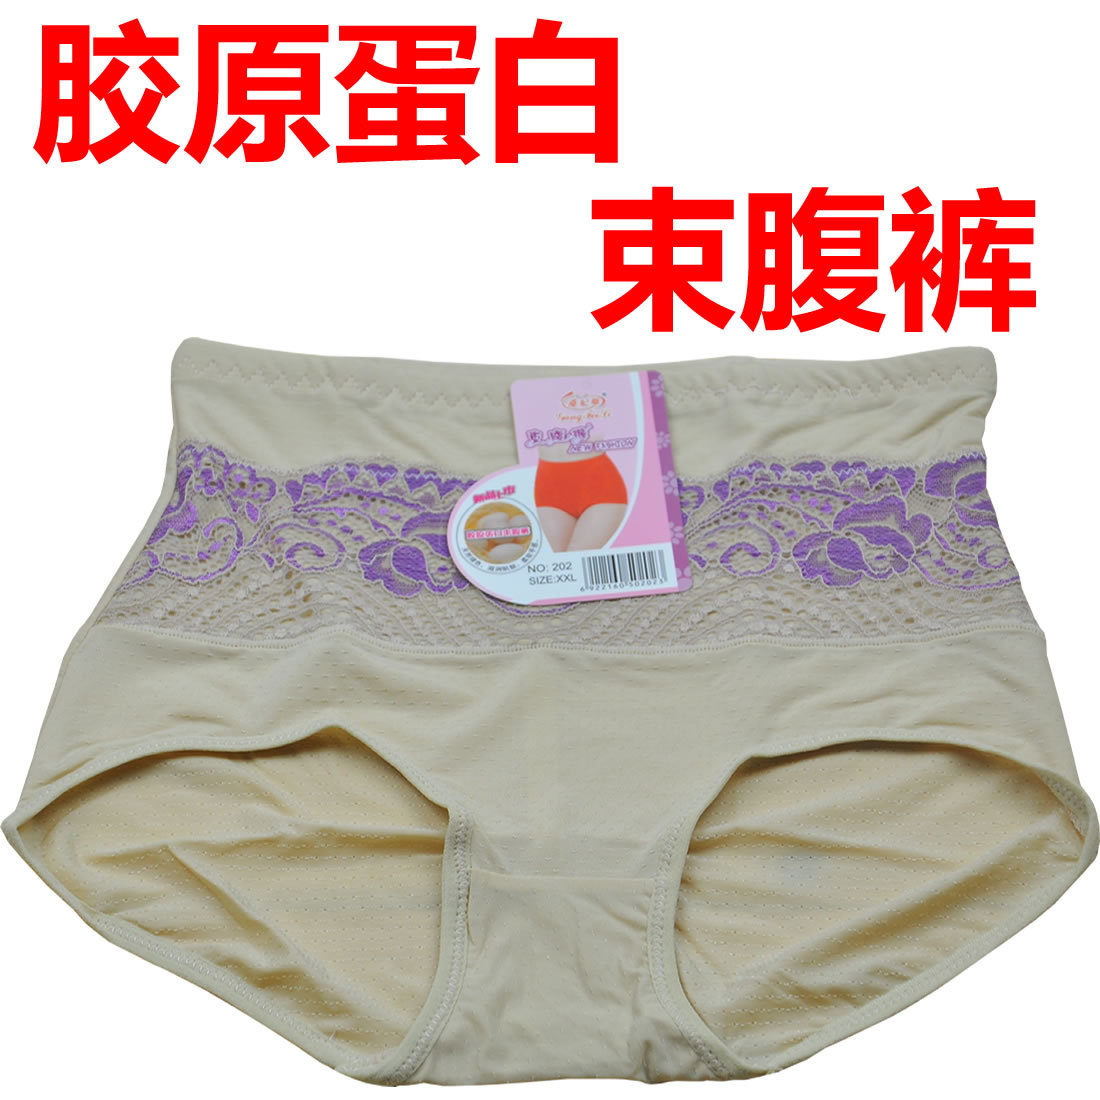 Beauty care panties butt-lifting tiebelt panties women's high waist trigonometric corselets pants abdomen drawing pants 6pcs/lot